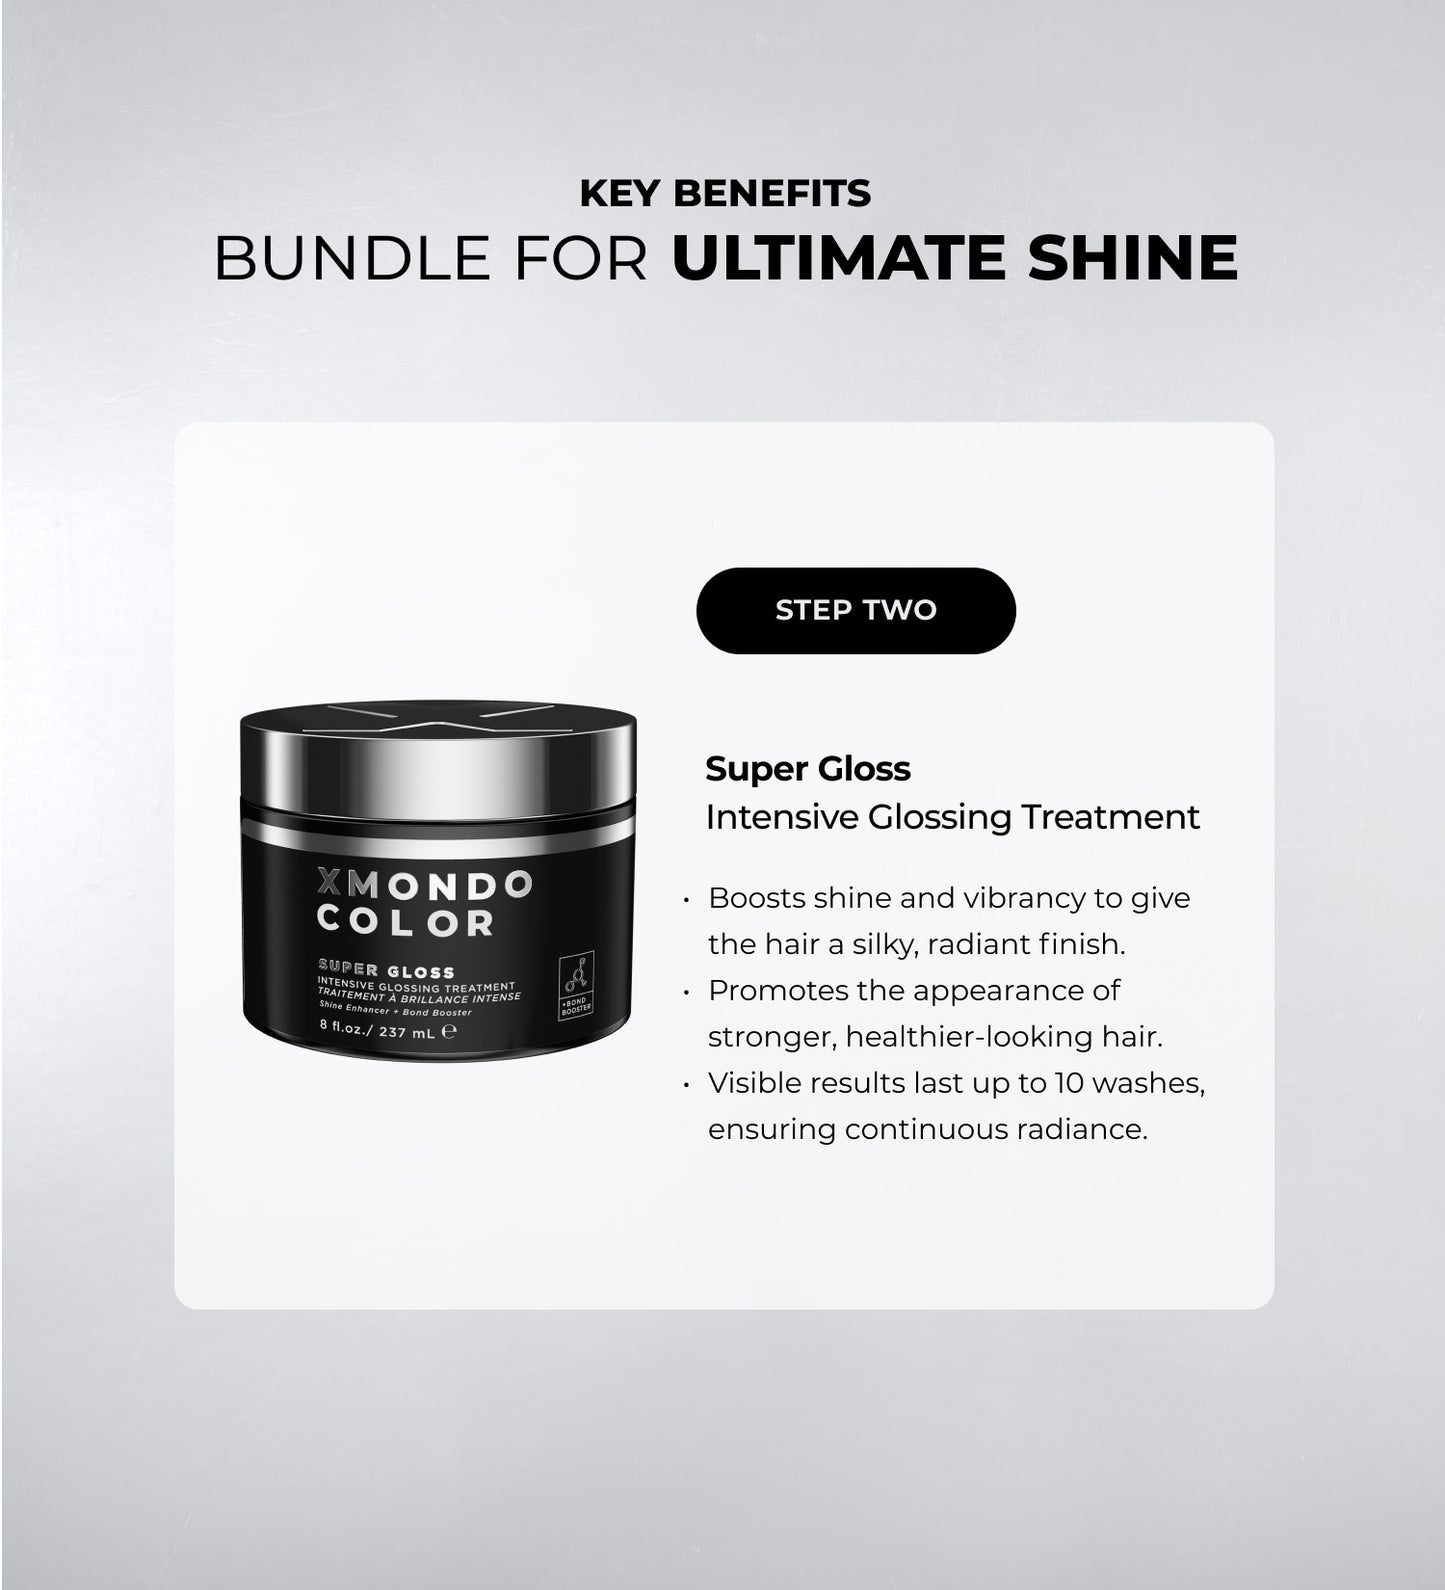 Bundle for Ultimate Shine